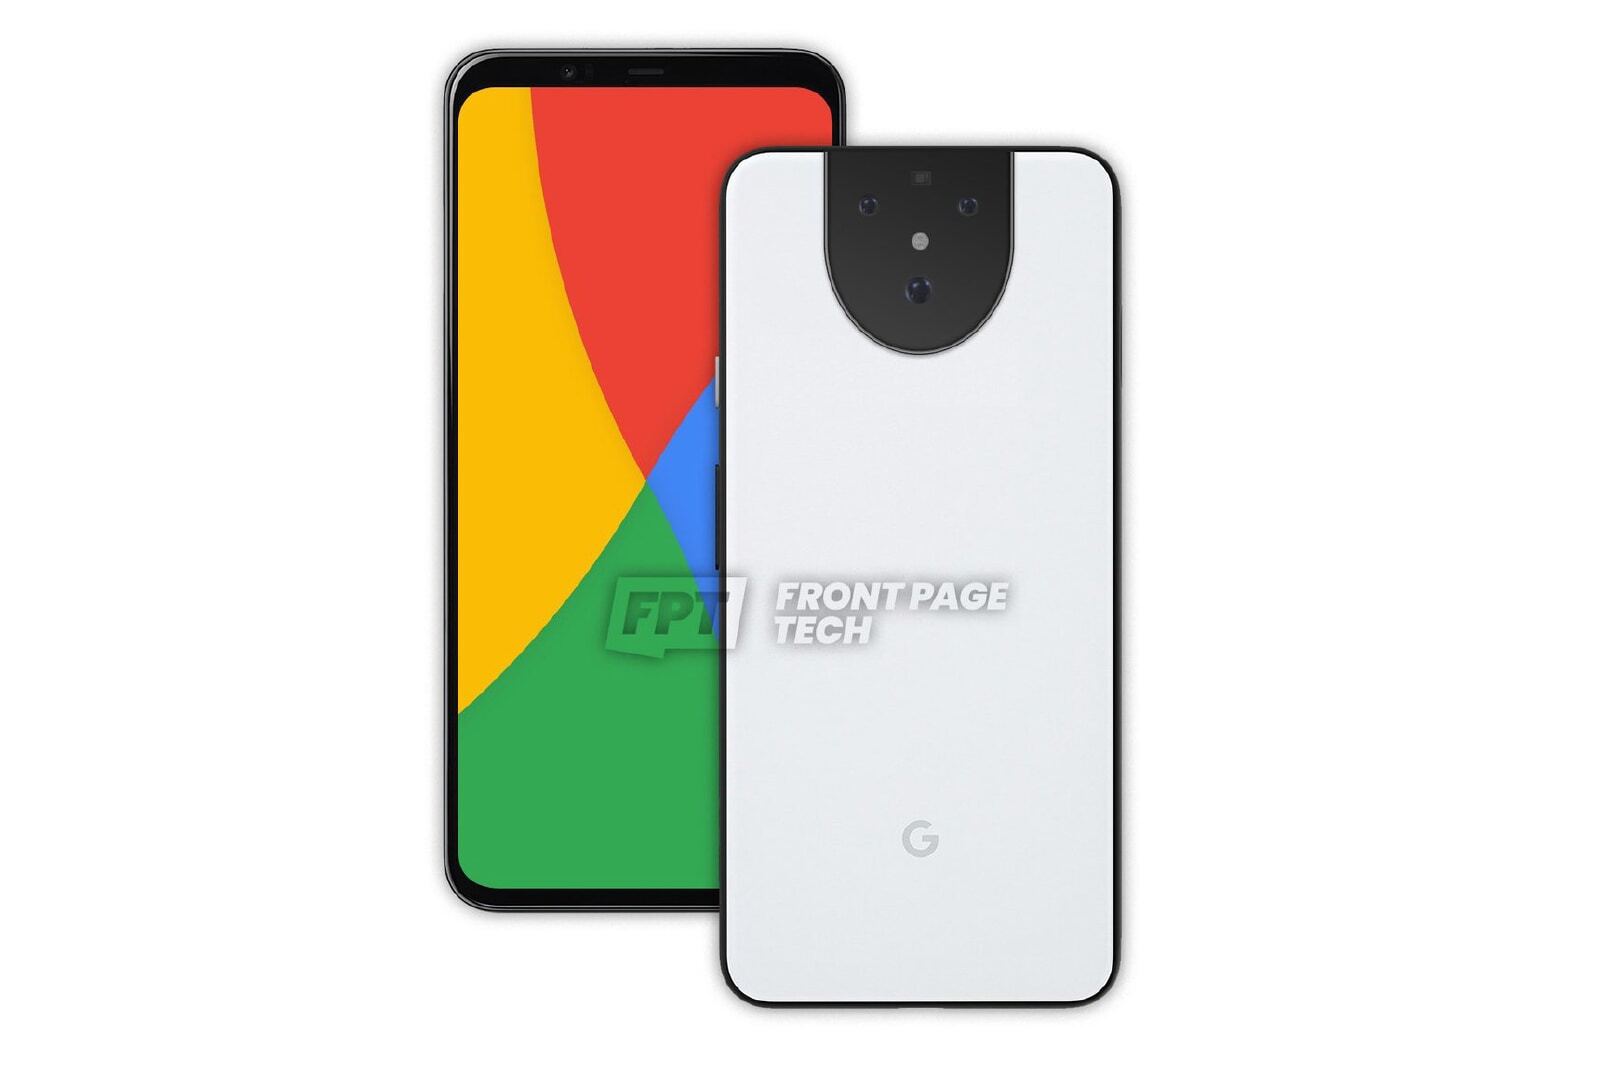 Alleged Google Pixel 5 prototype design - Despite the Pixel 4's reception, Google Pixel sales were surprisingly strong in 2019